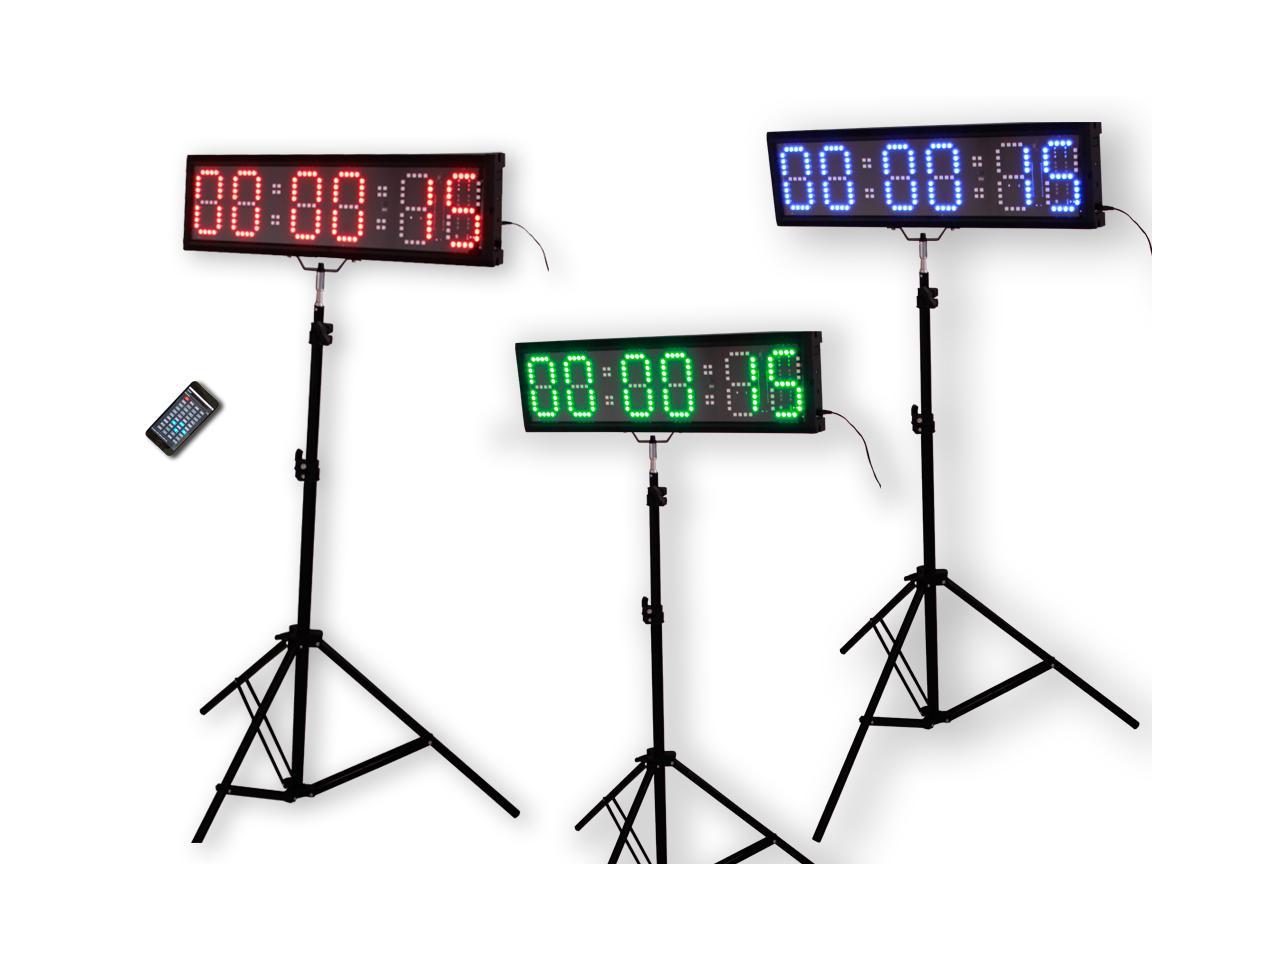 Up Stopwatch Wall Clock Eu 4 6 Digits Programmable Interval Countdown